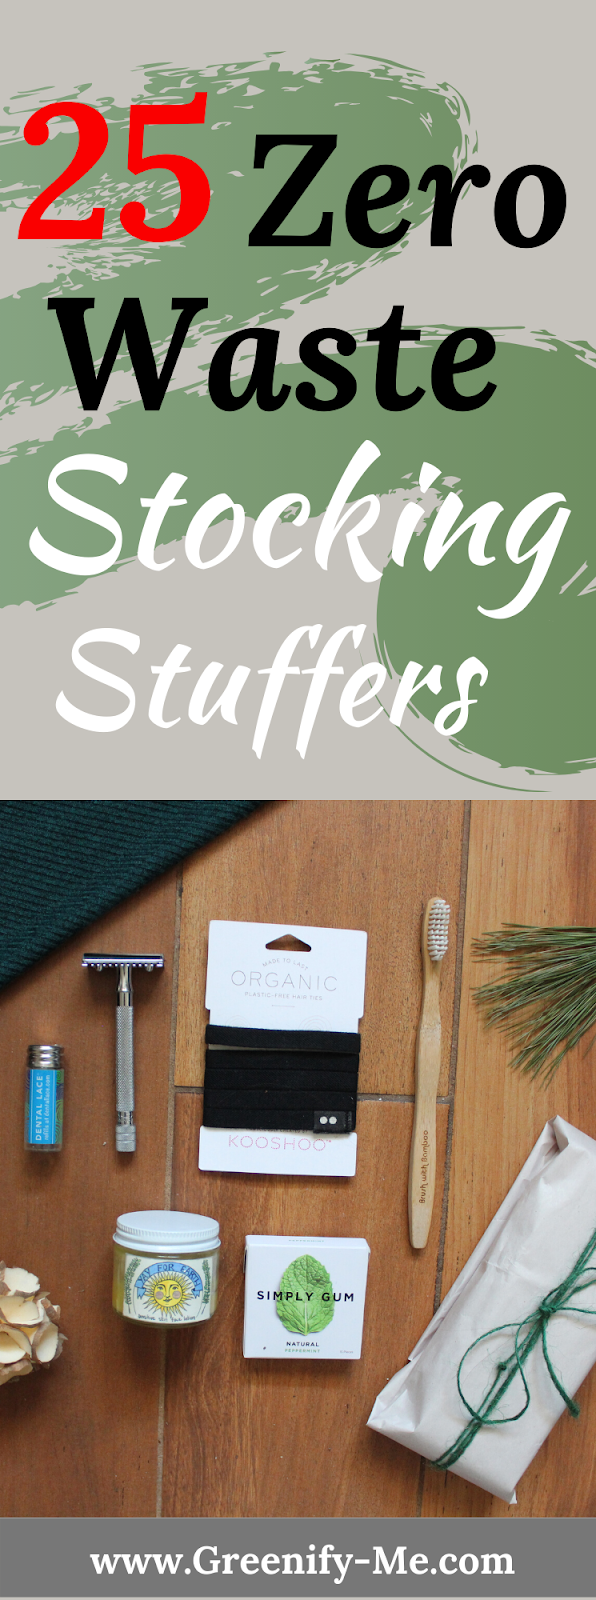 61 Best Stocking Stuffer Ideas: Non-wasteful Budget Ideas (Guide)